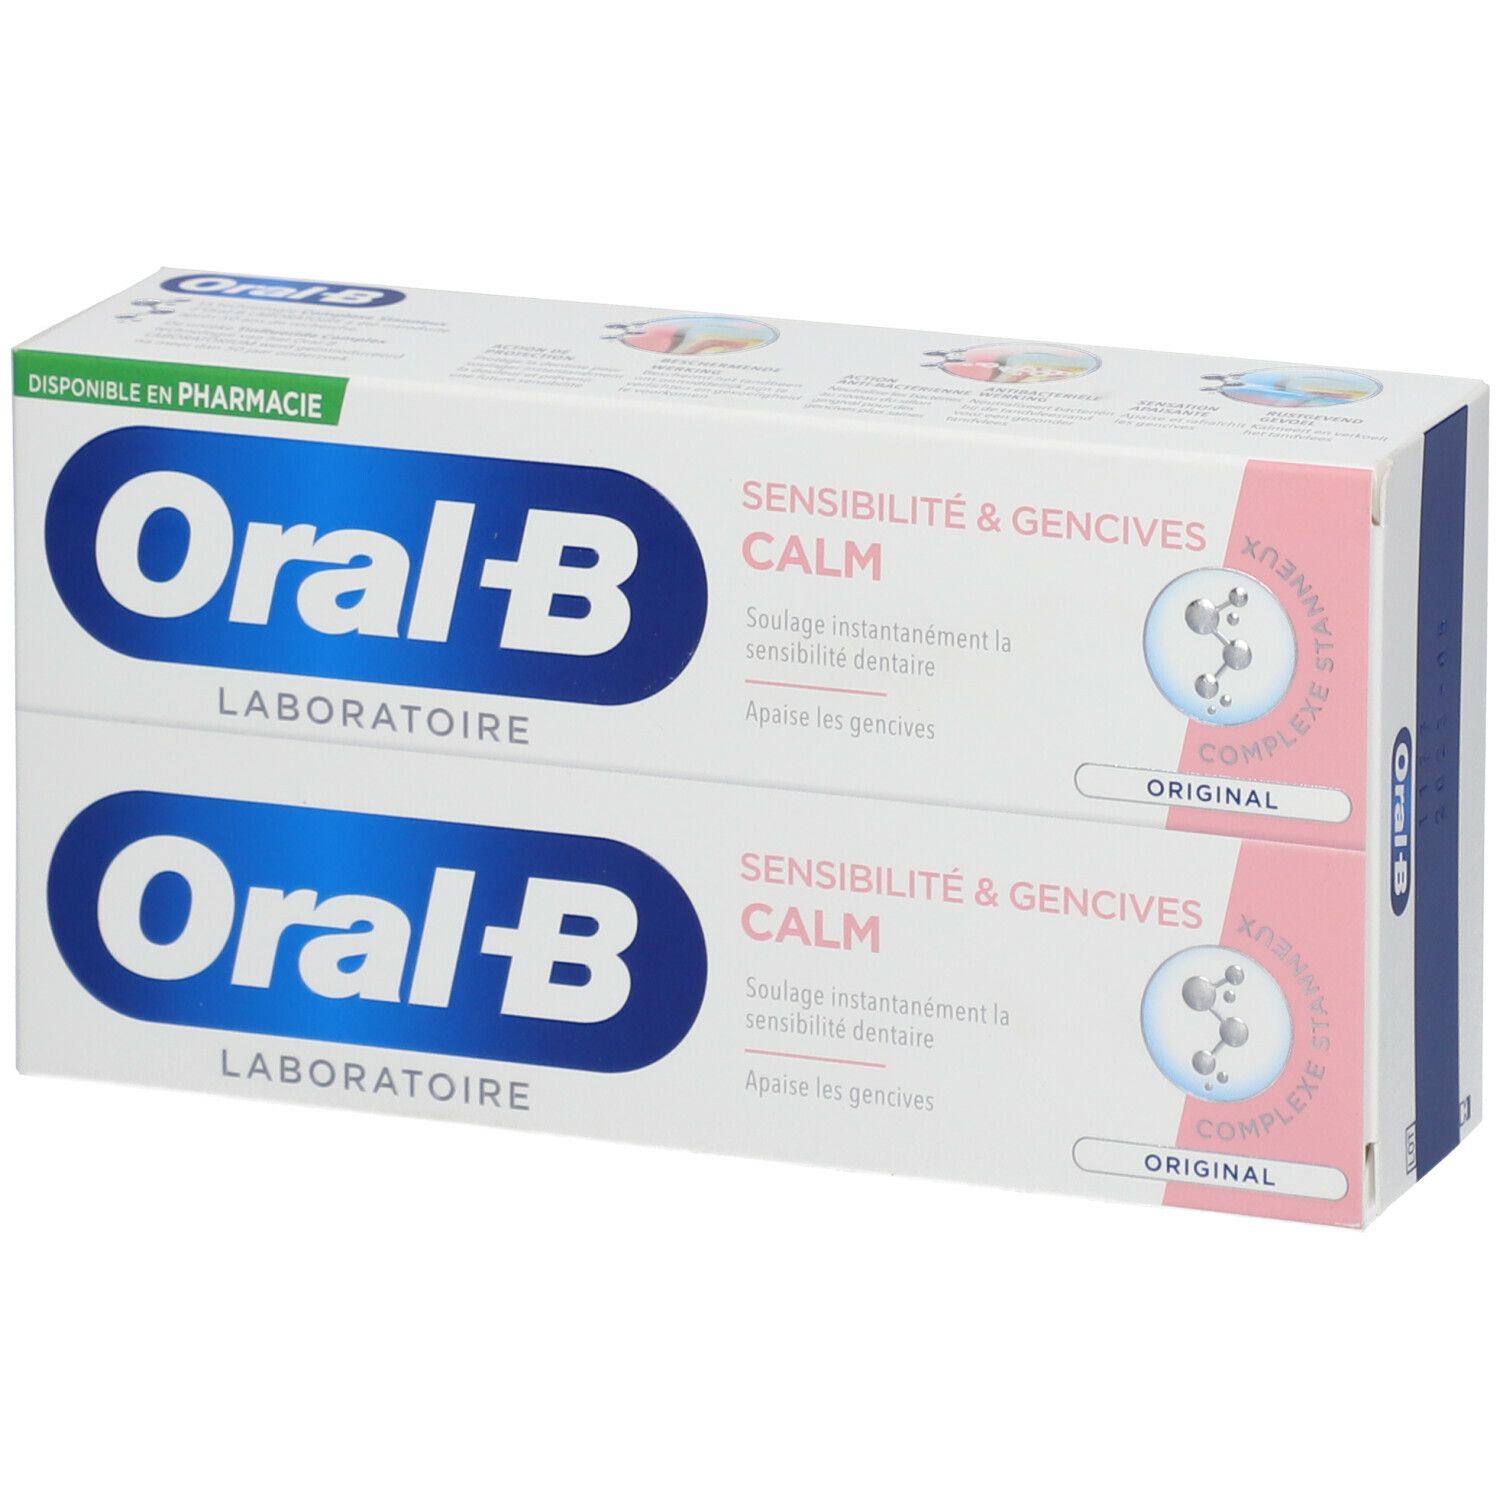 Oral-B Laboratoire Sensibilité & Gencives Calm Original Dentifrice